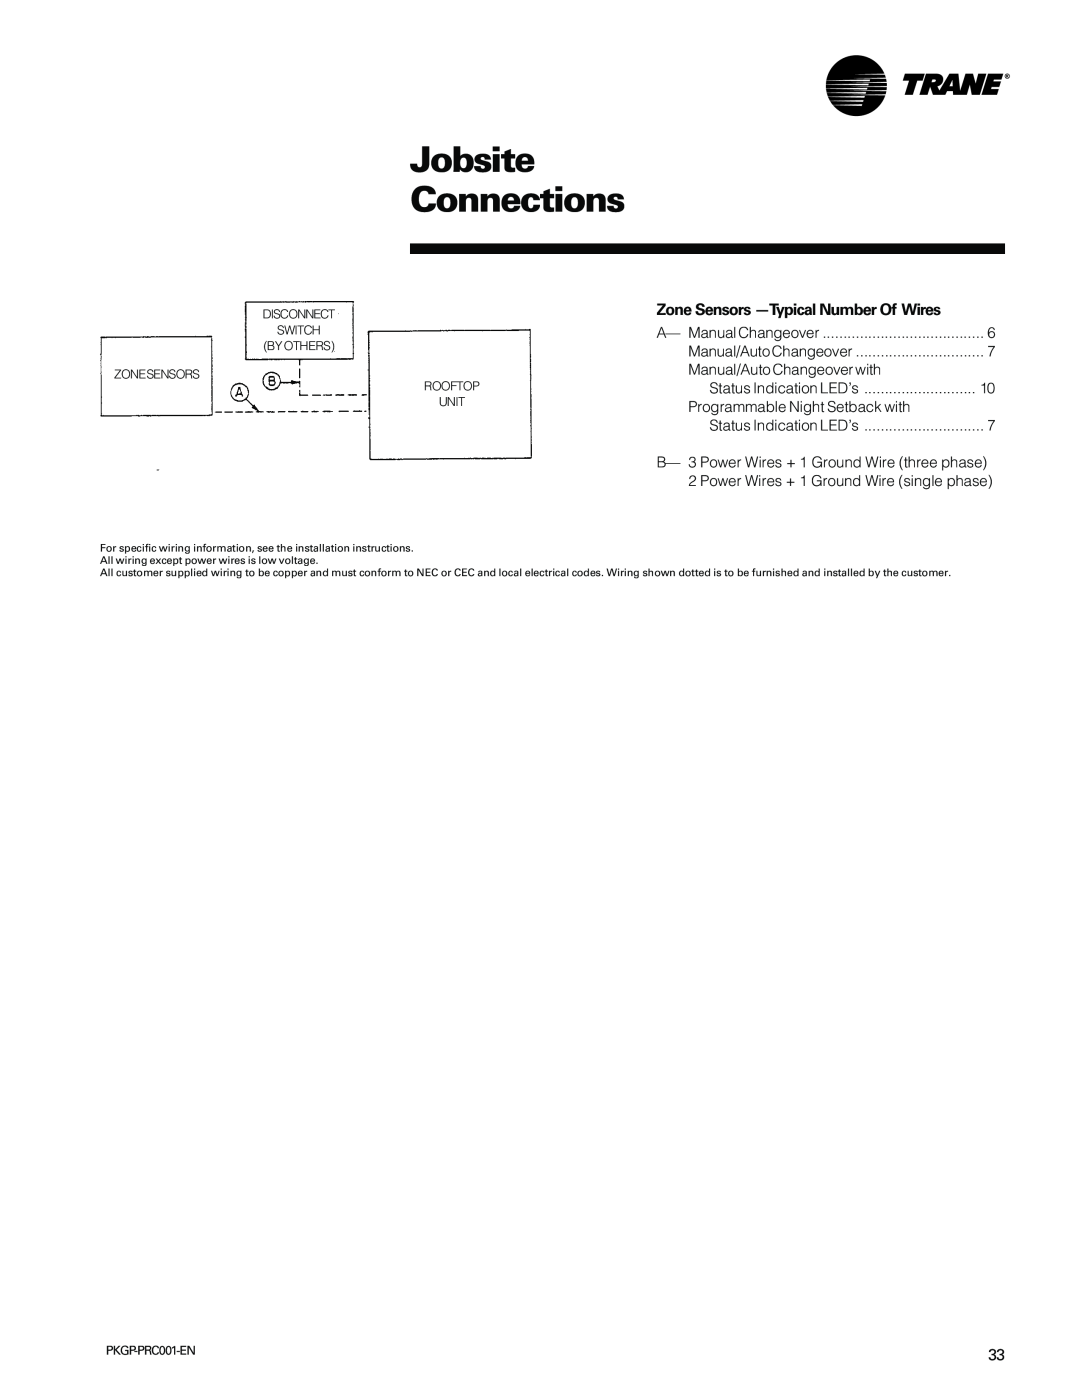 Trane PKGP-PRC001-EN manual Jobsite Connections, Zone Sensors -TypicalNumber Of Wires 